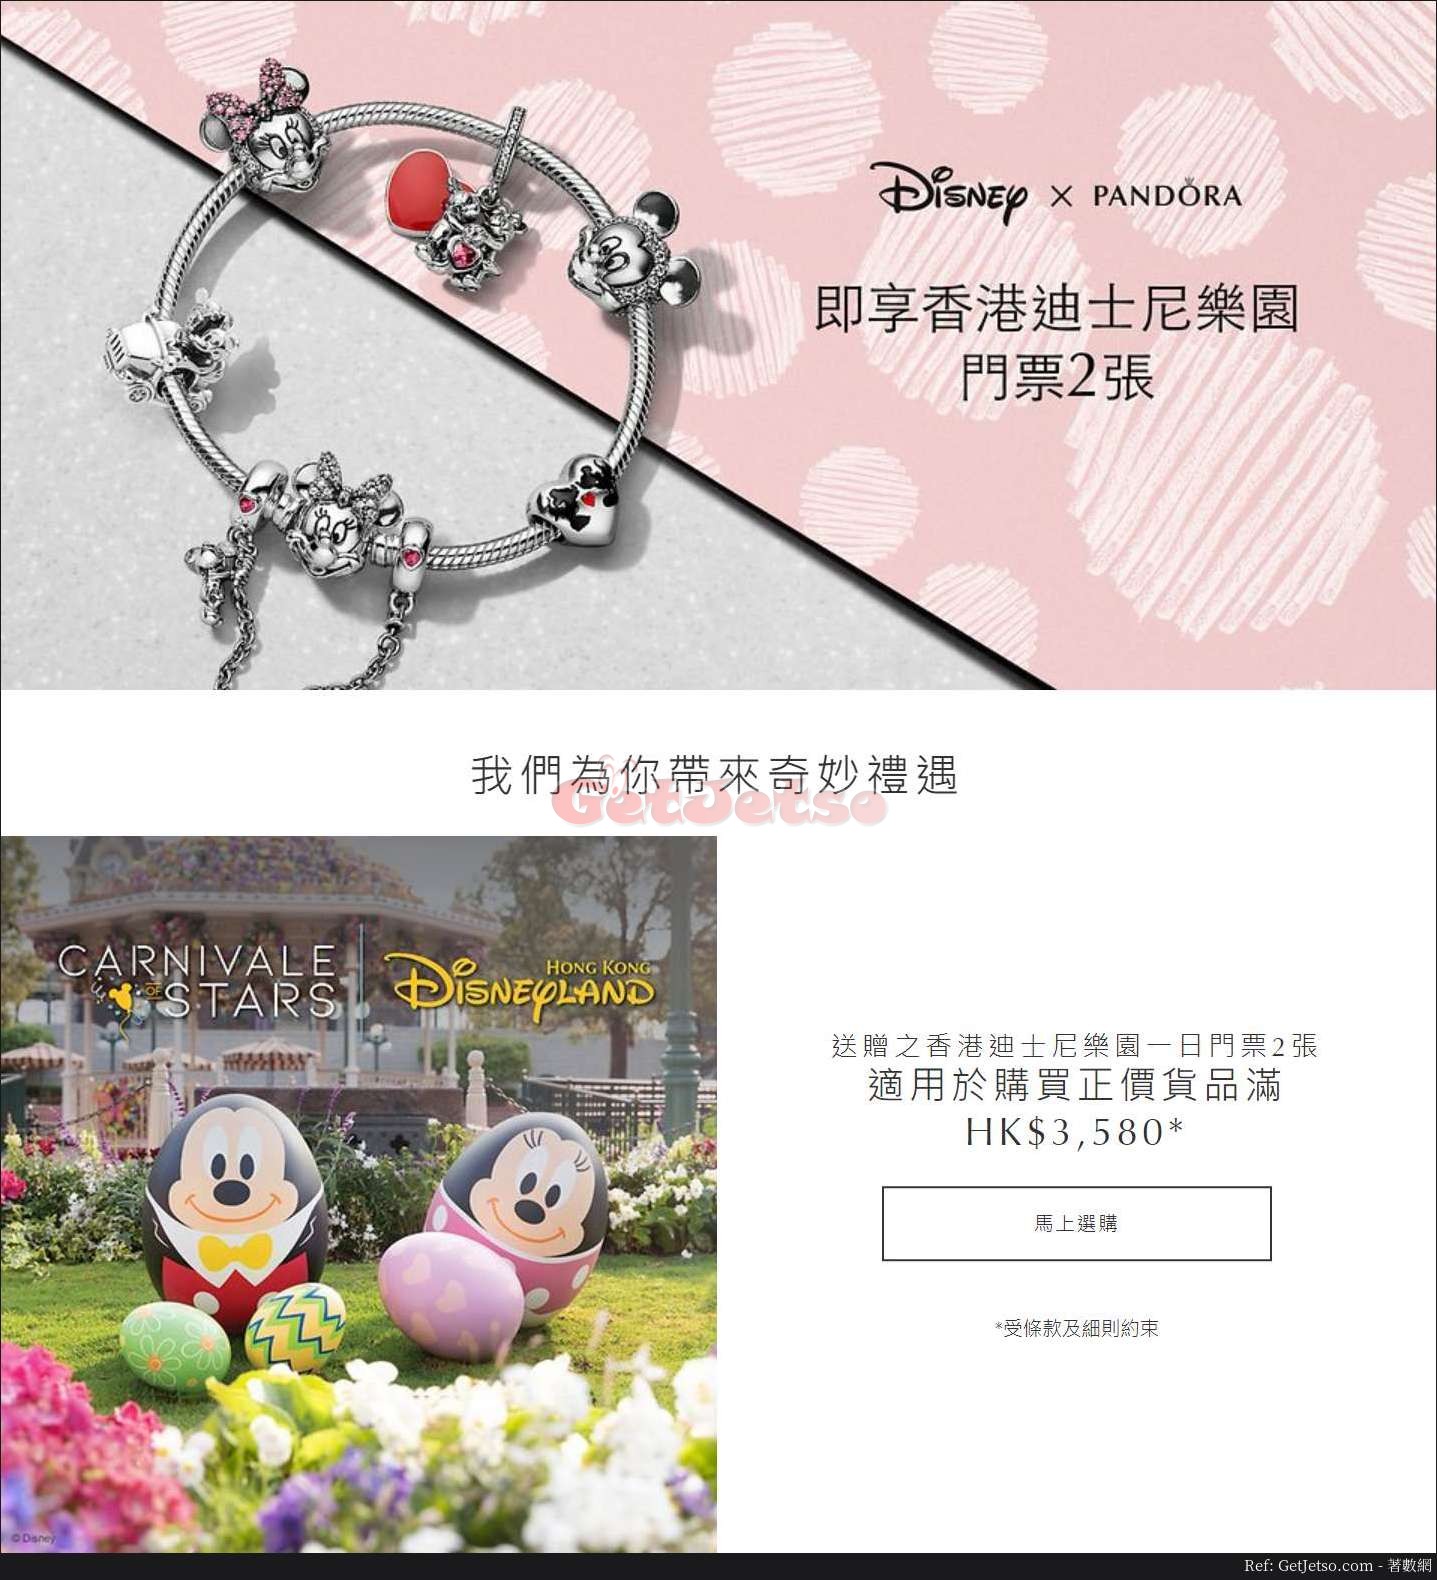 PANDORA 網店購物滿80送香港迪士尼樂園1日門票2張優惠(至19年4月4日)圖片1